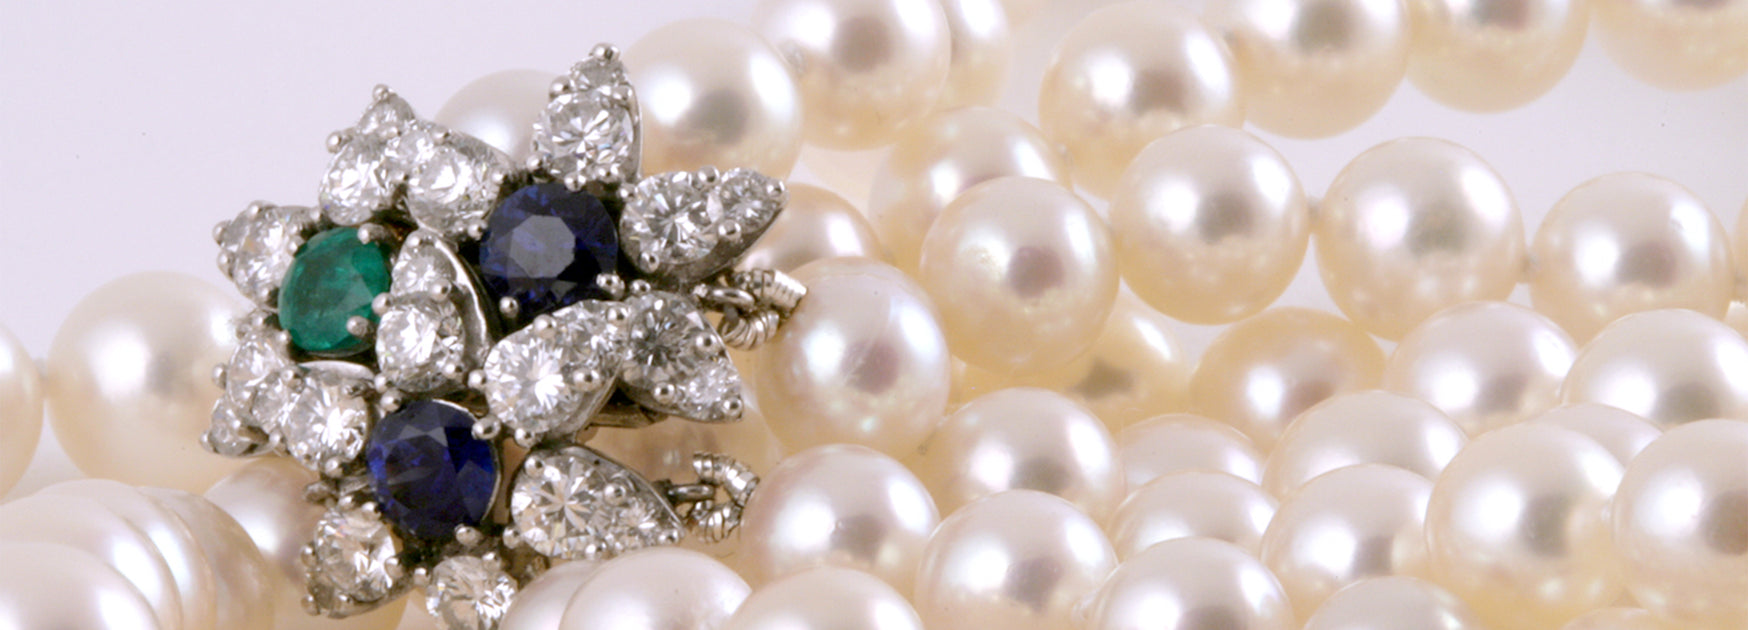 Natural VS Cultured Pearls — Mozeris Fine Antiques